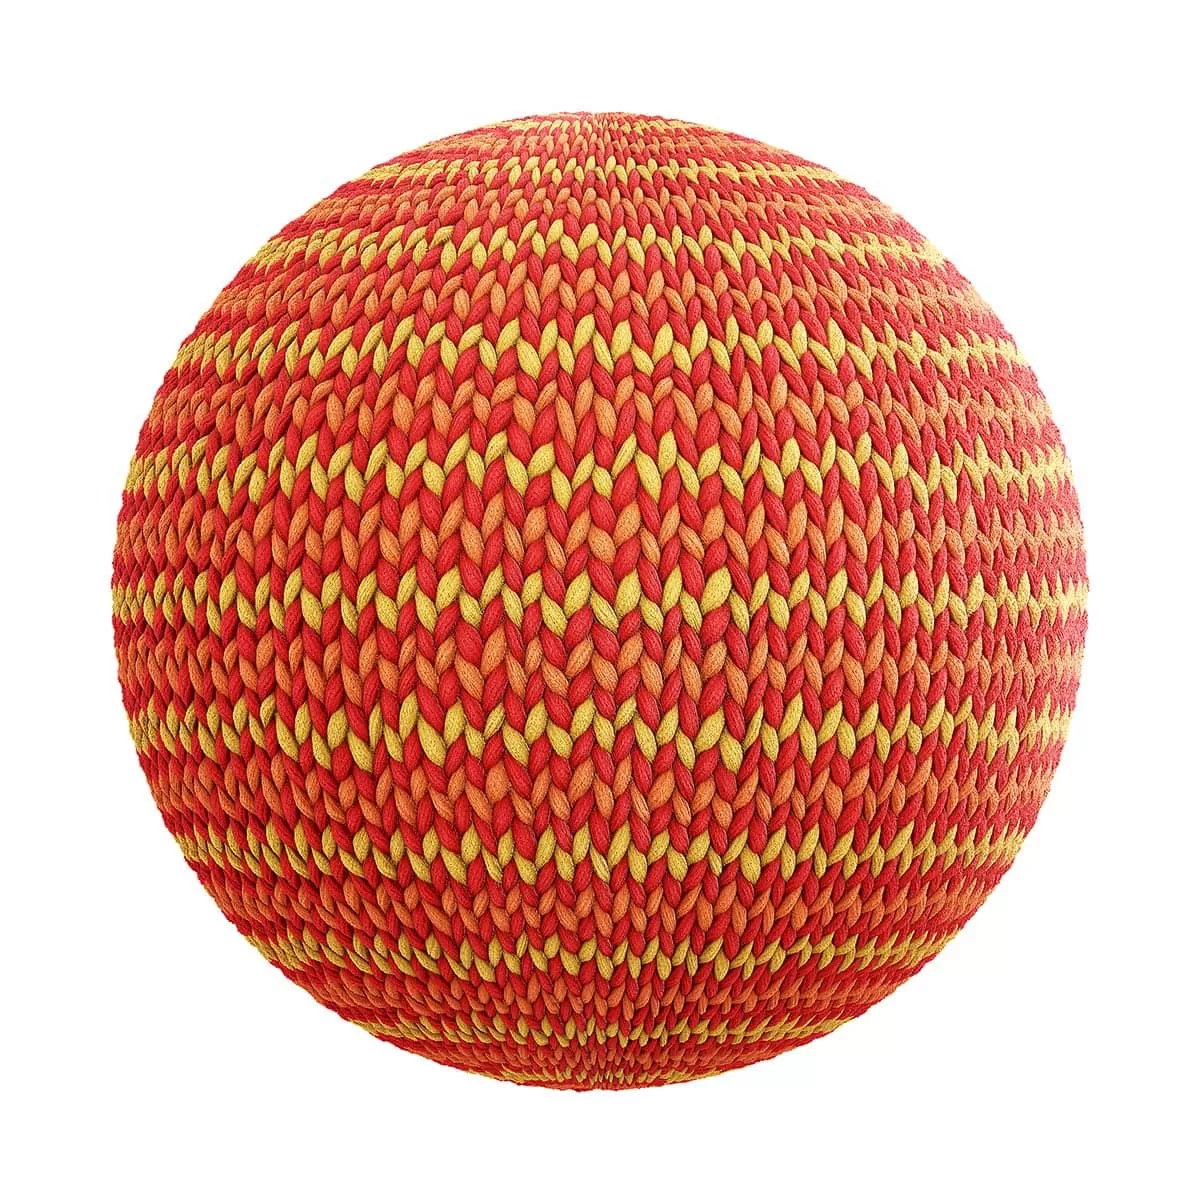 PBR Textures Volume 27 – Fabrics – 4K – 8K – red_and_orange_wool_fabric_26_11